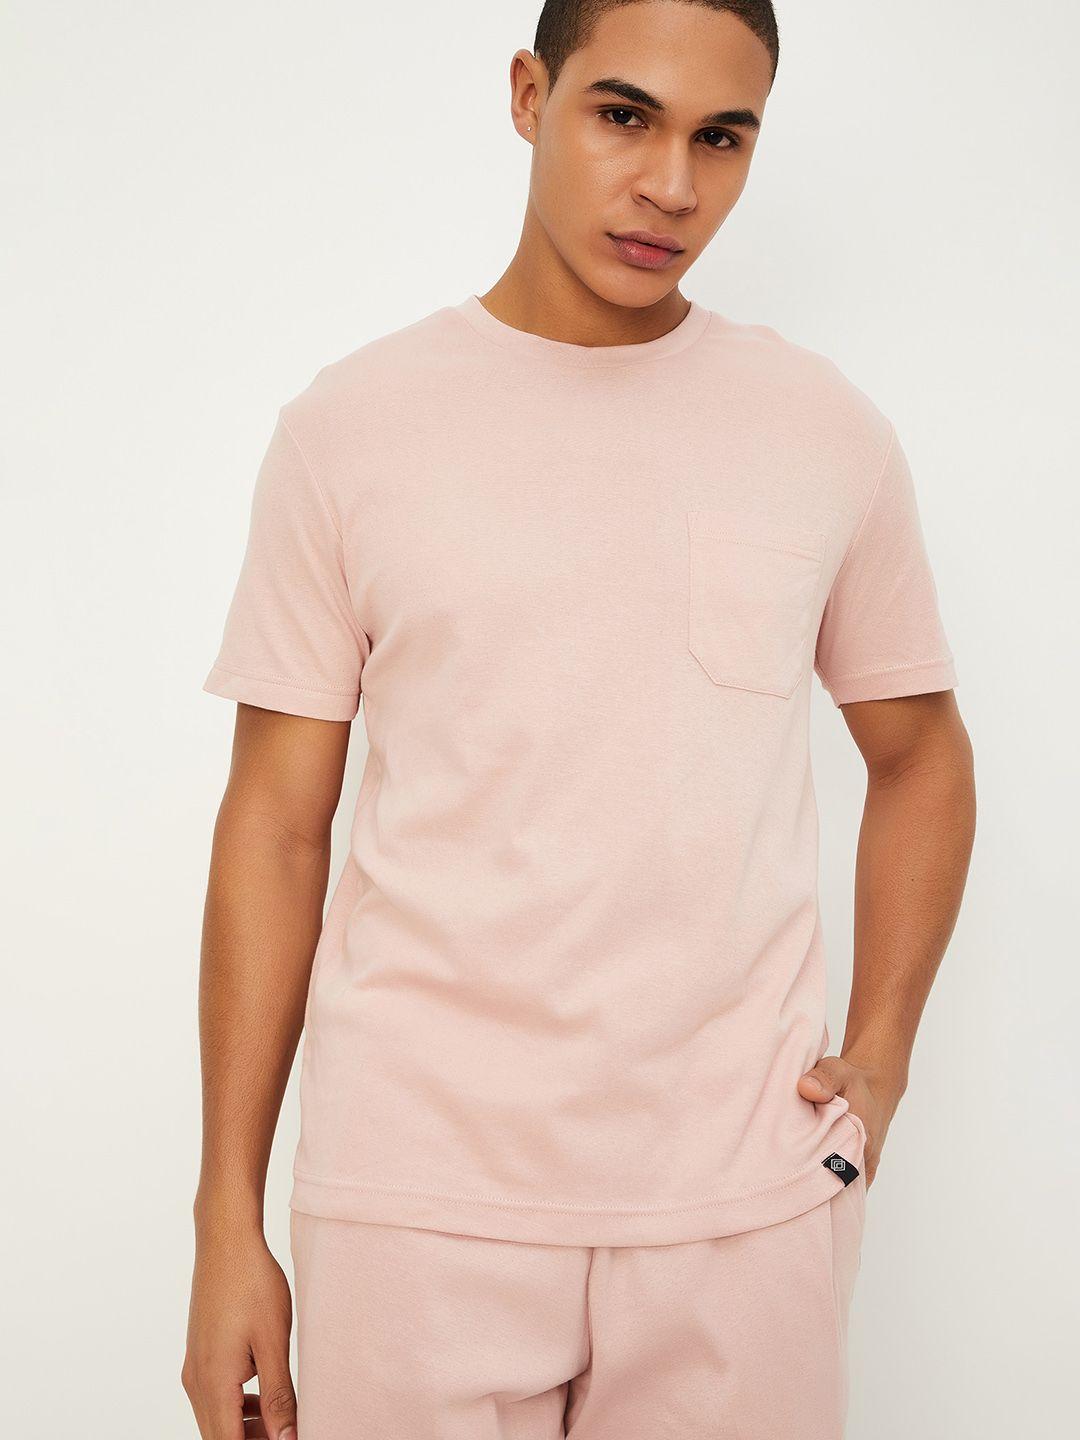 max round neck short sleeves pockets cotton regular t-shirt